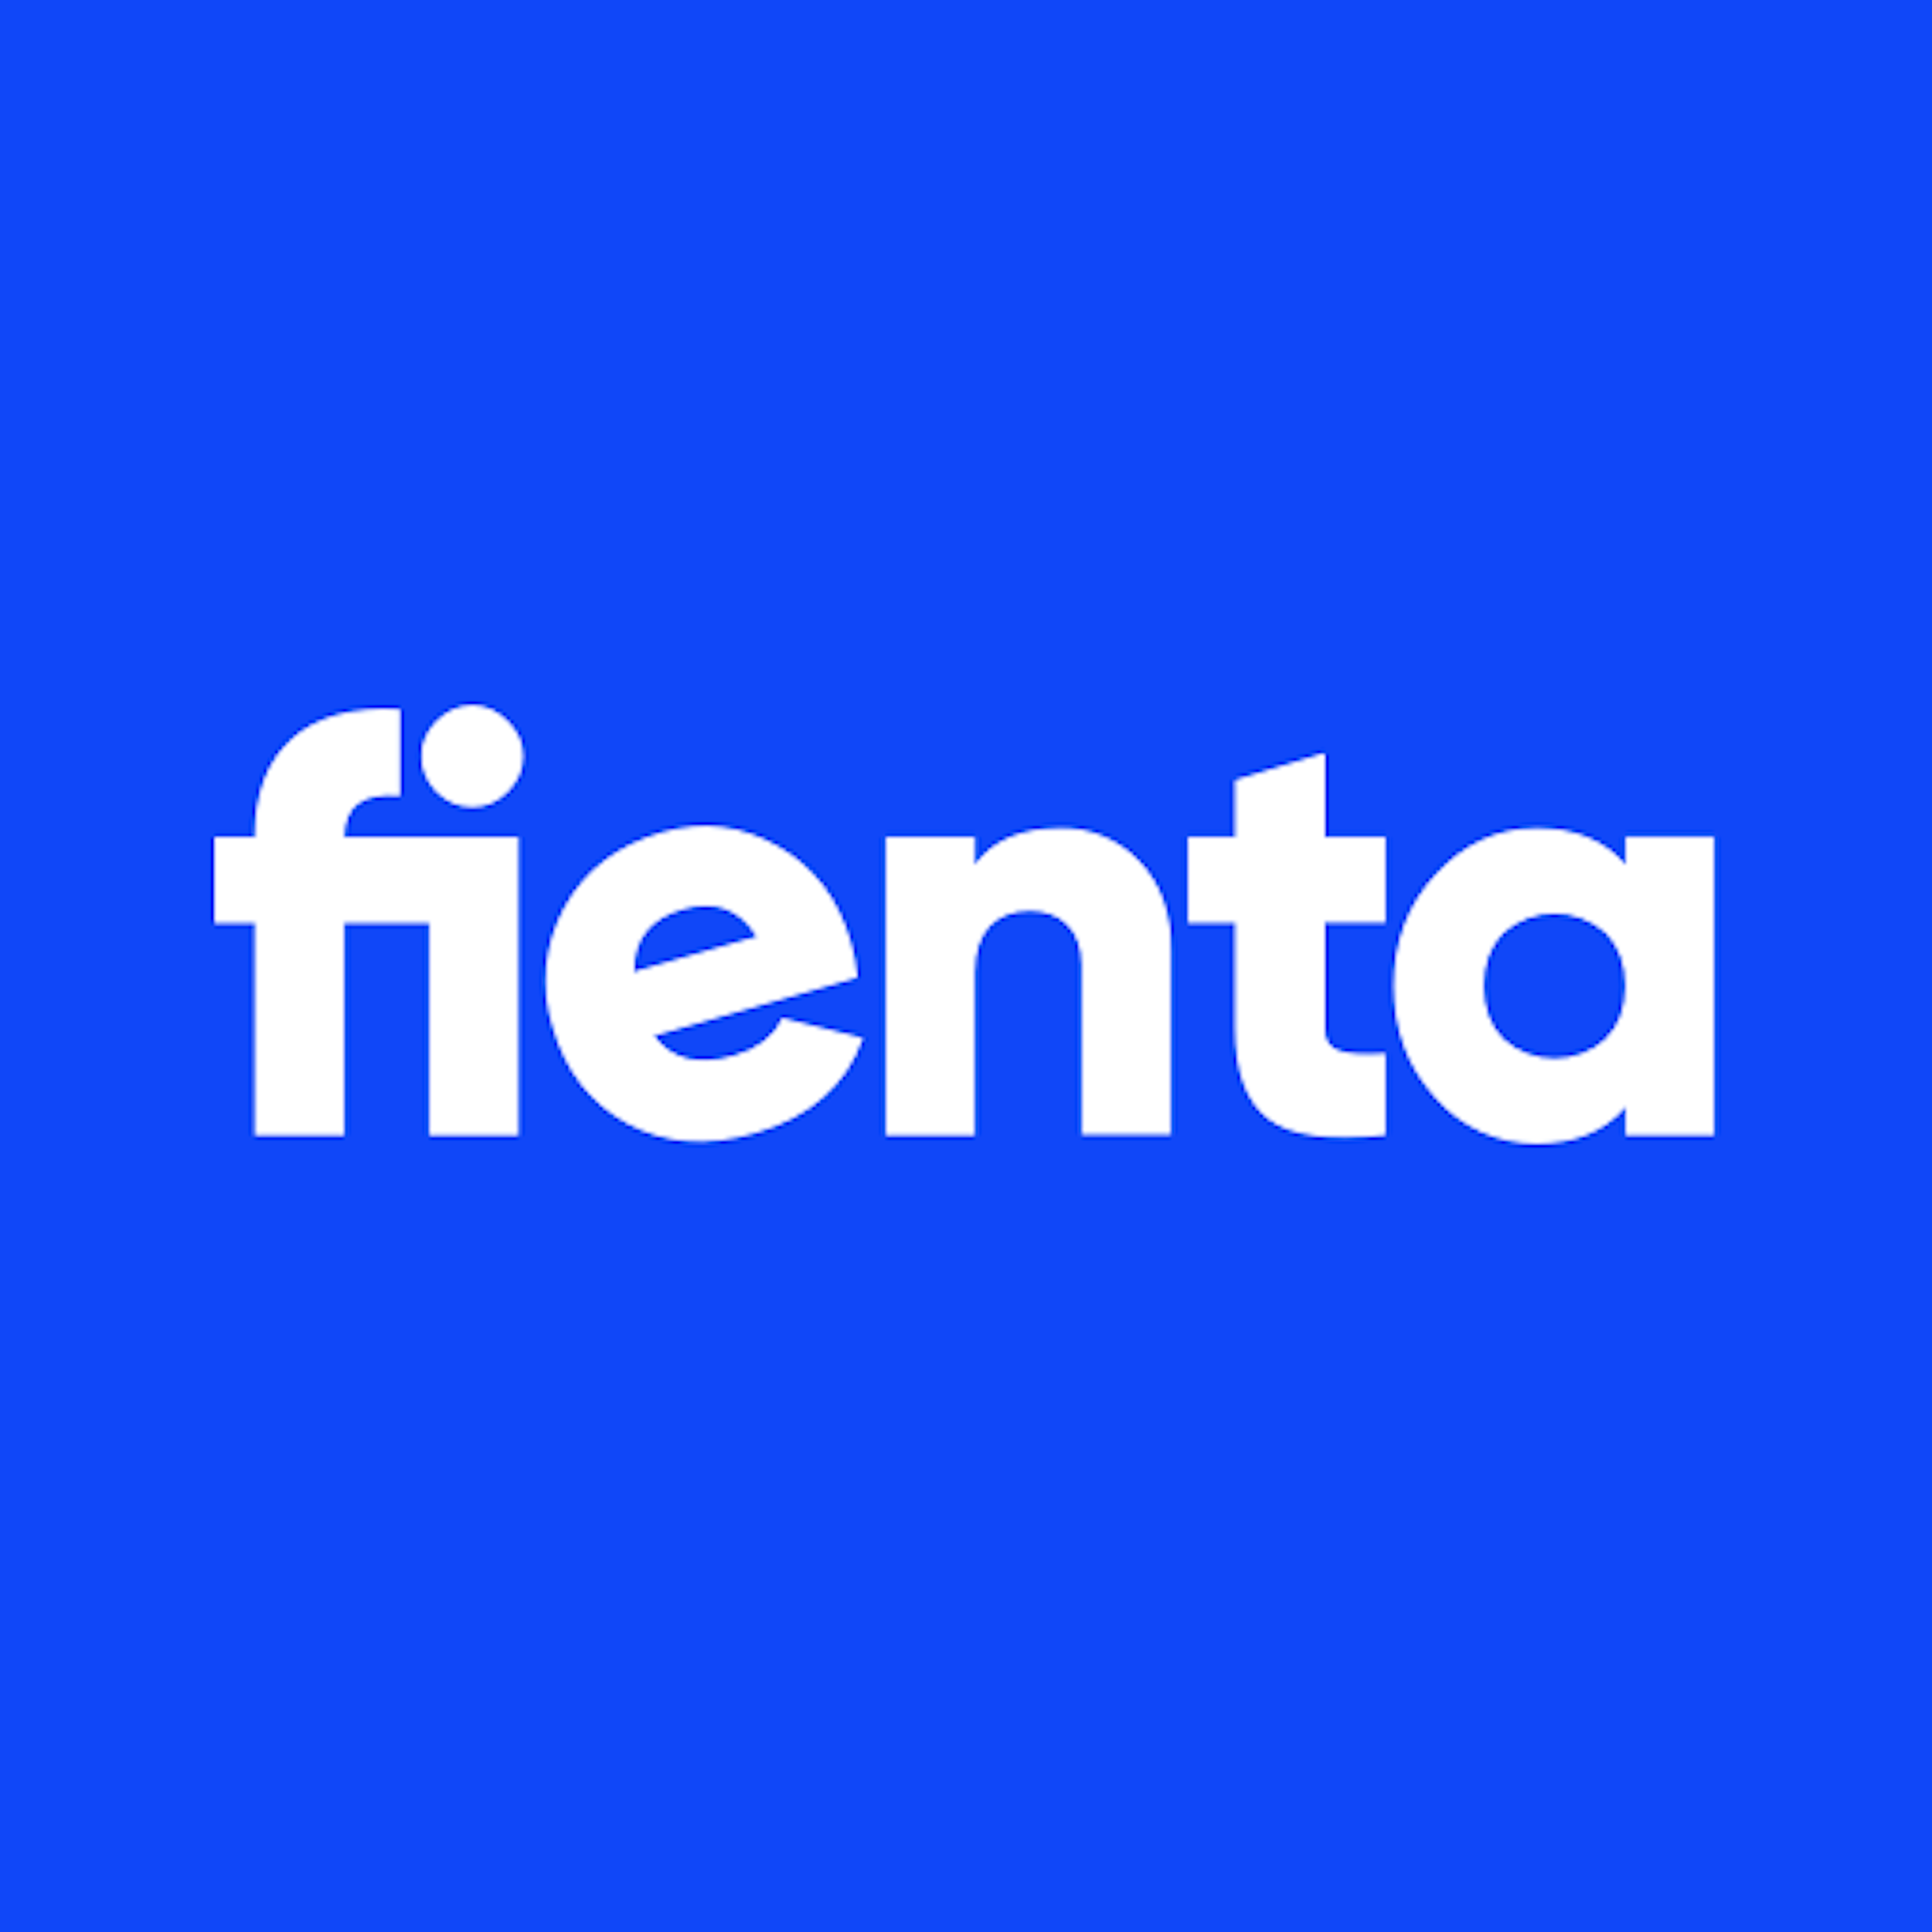 Fienta Logo